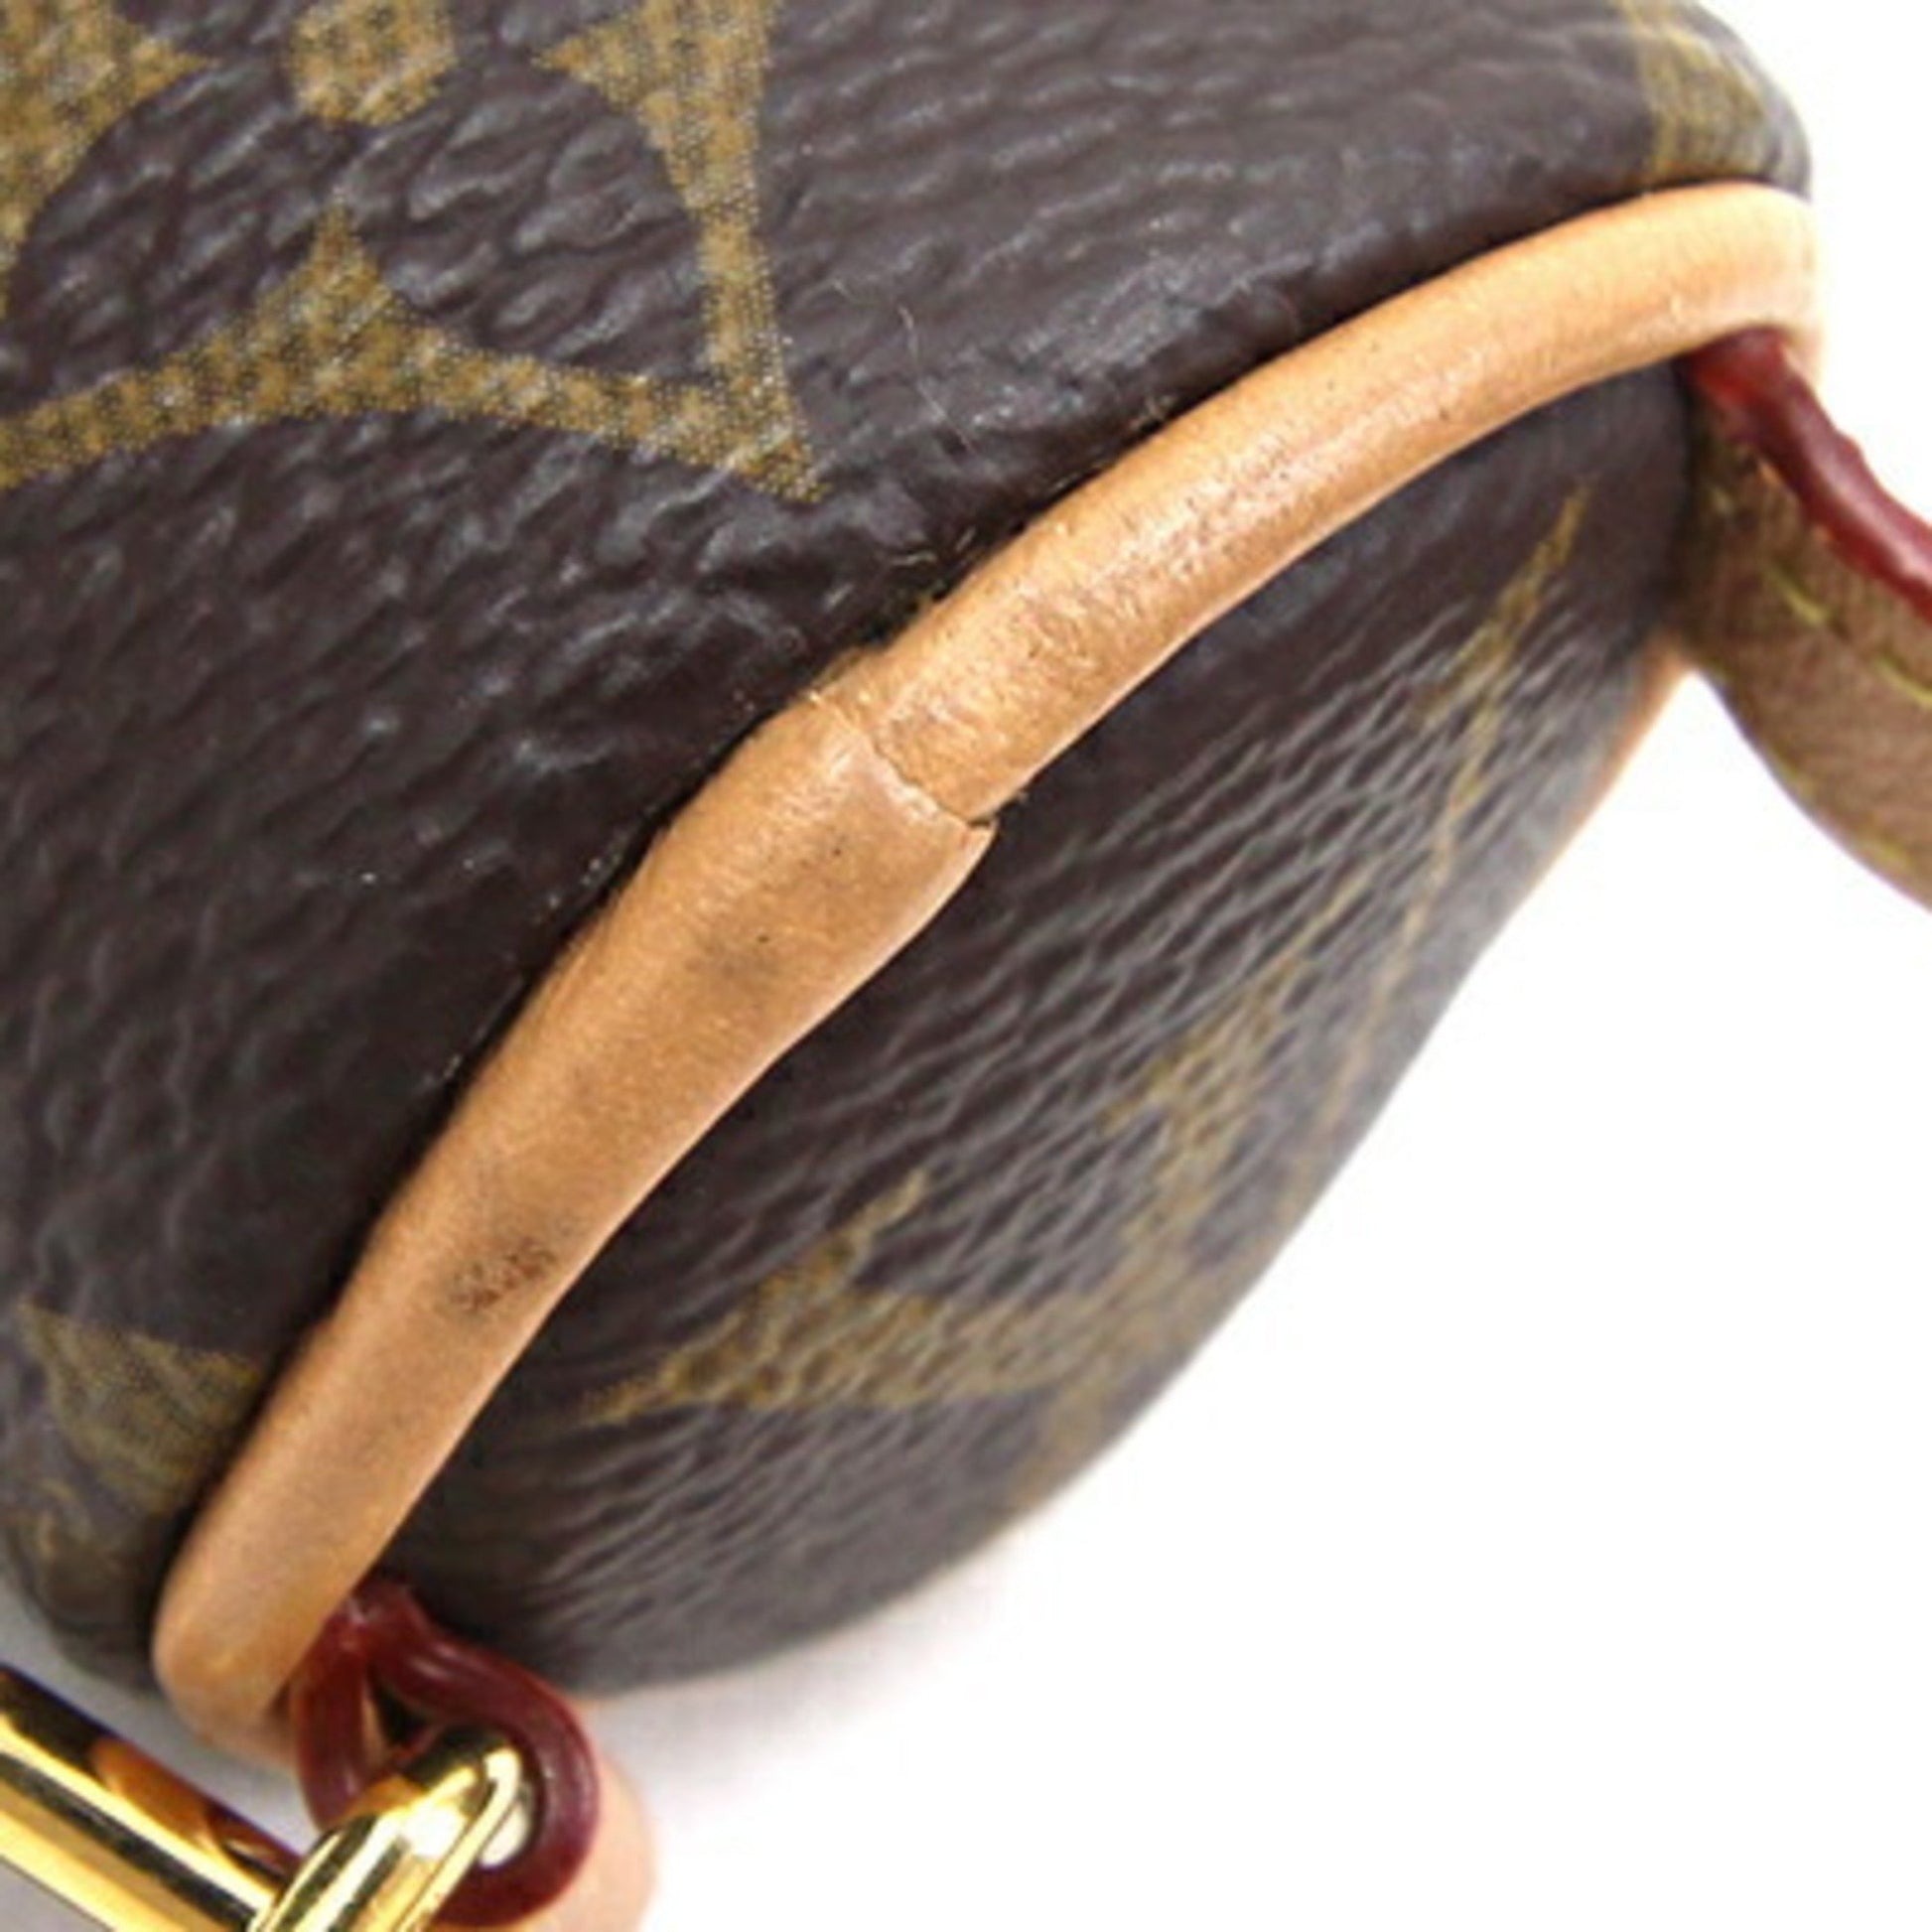 M00354 Louis Vuitton Monogram Micro Papillon Bag Charm